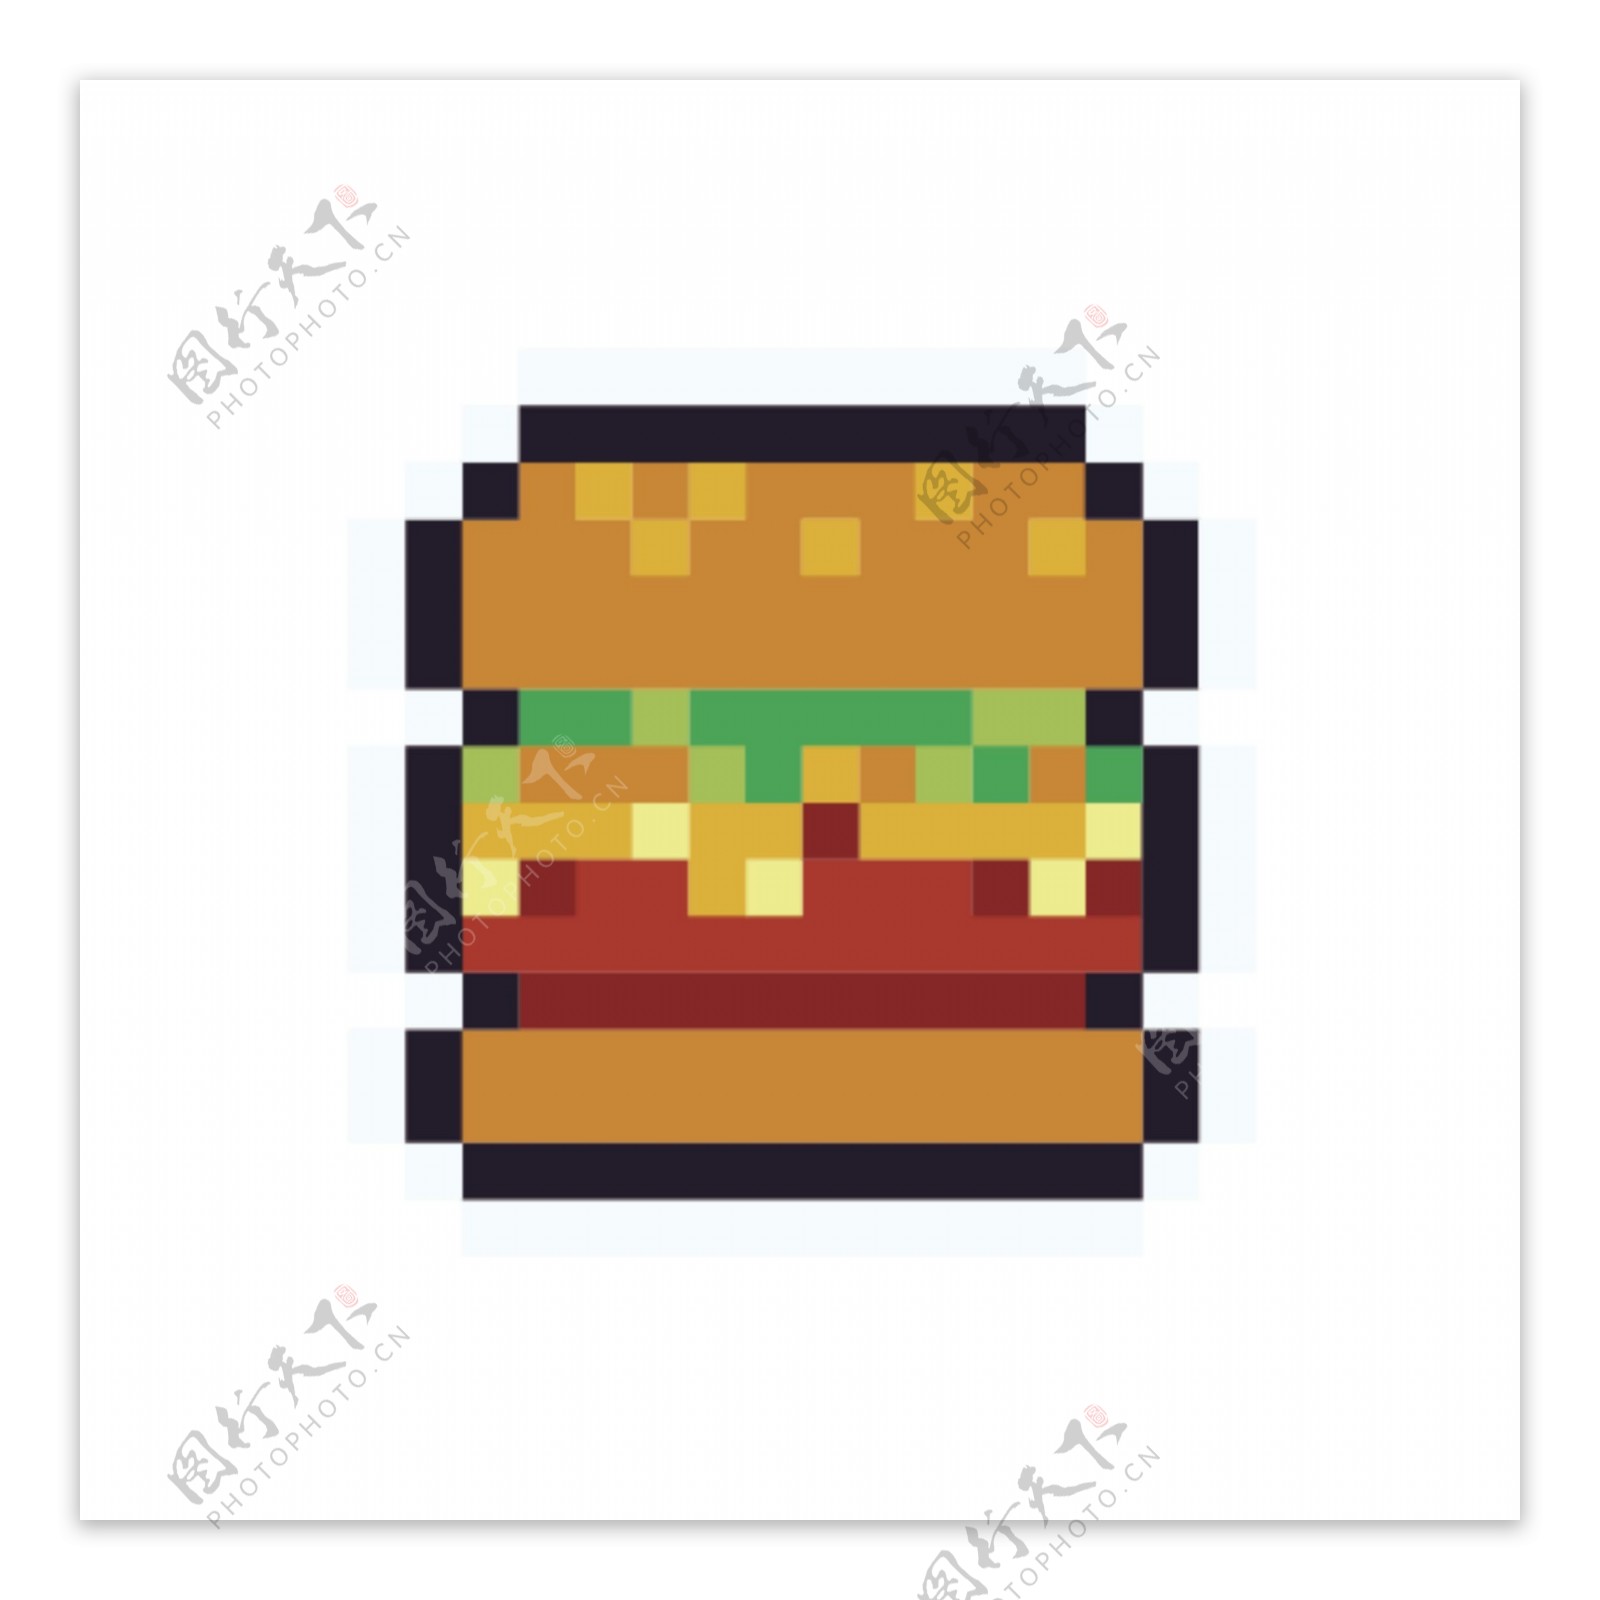 汉堡像素图标免扣png